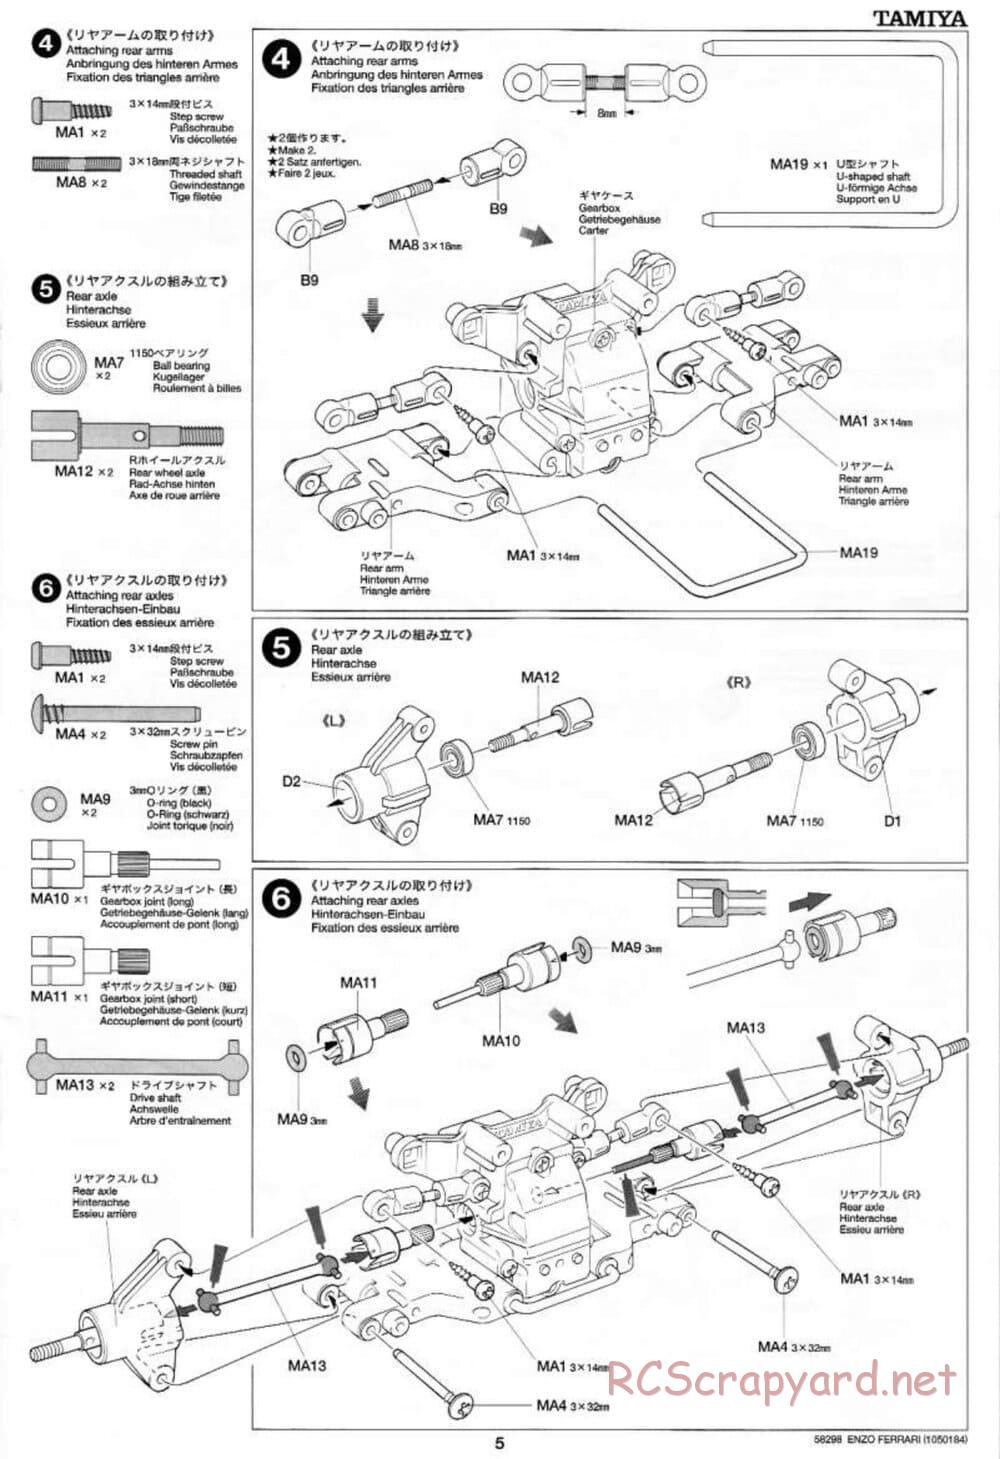 Tamiya - Enzo Ferrari - TB-01 Chassis - Manual - Page 5